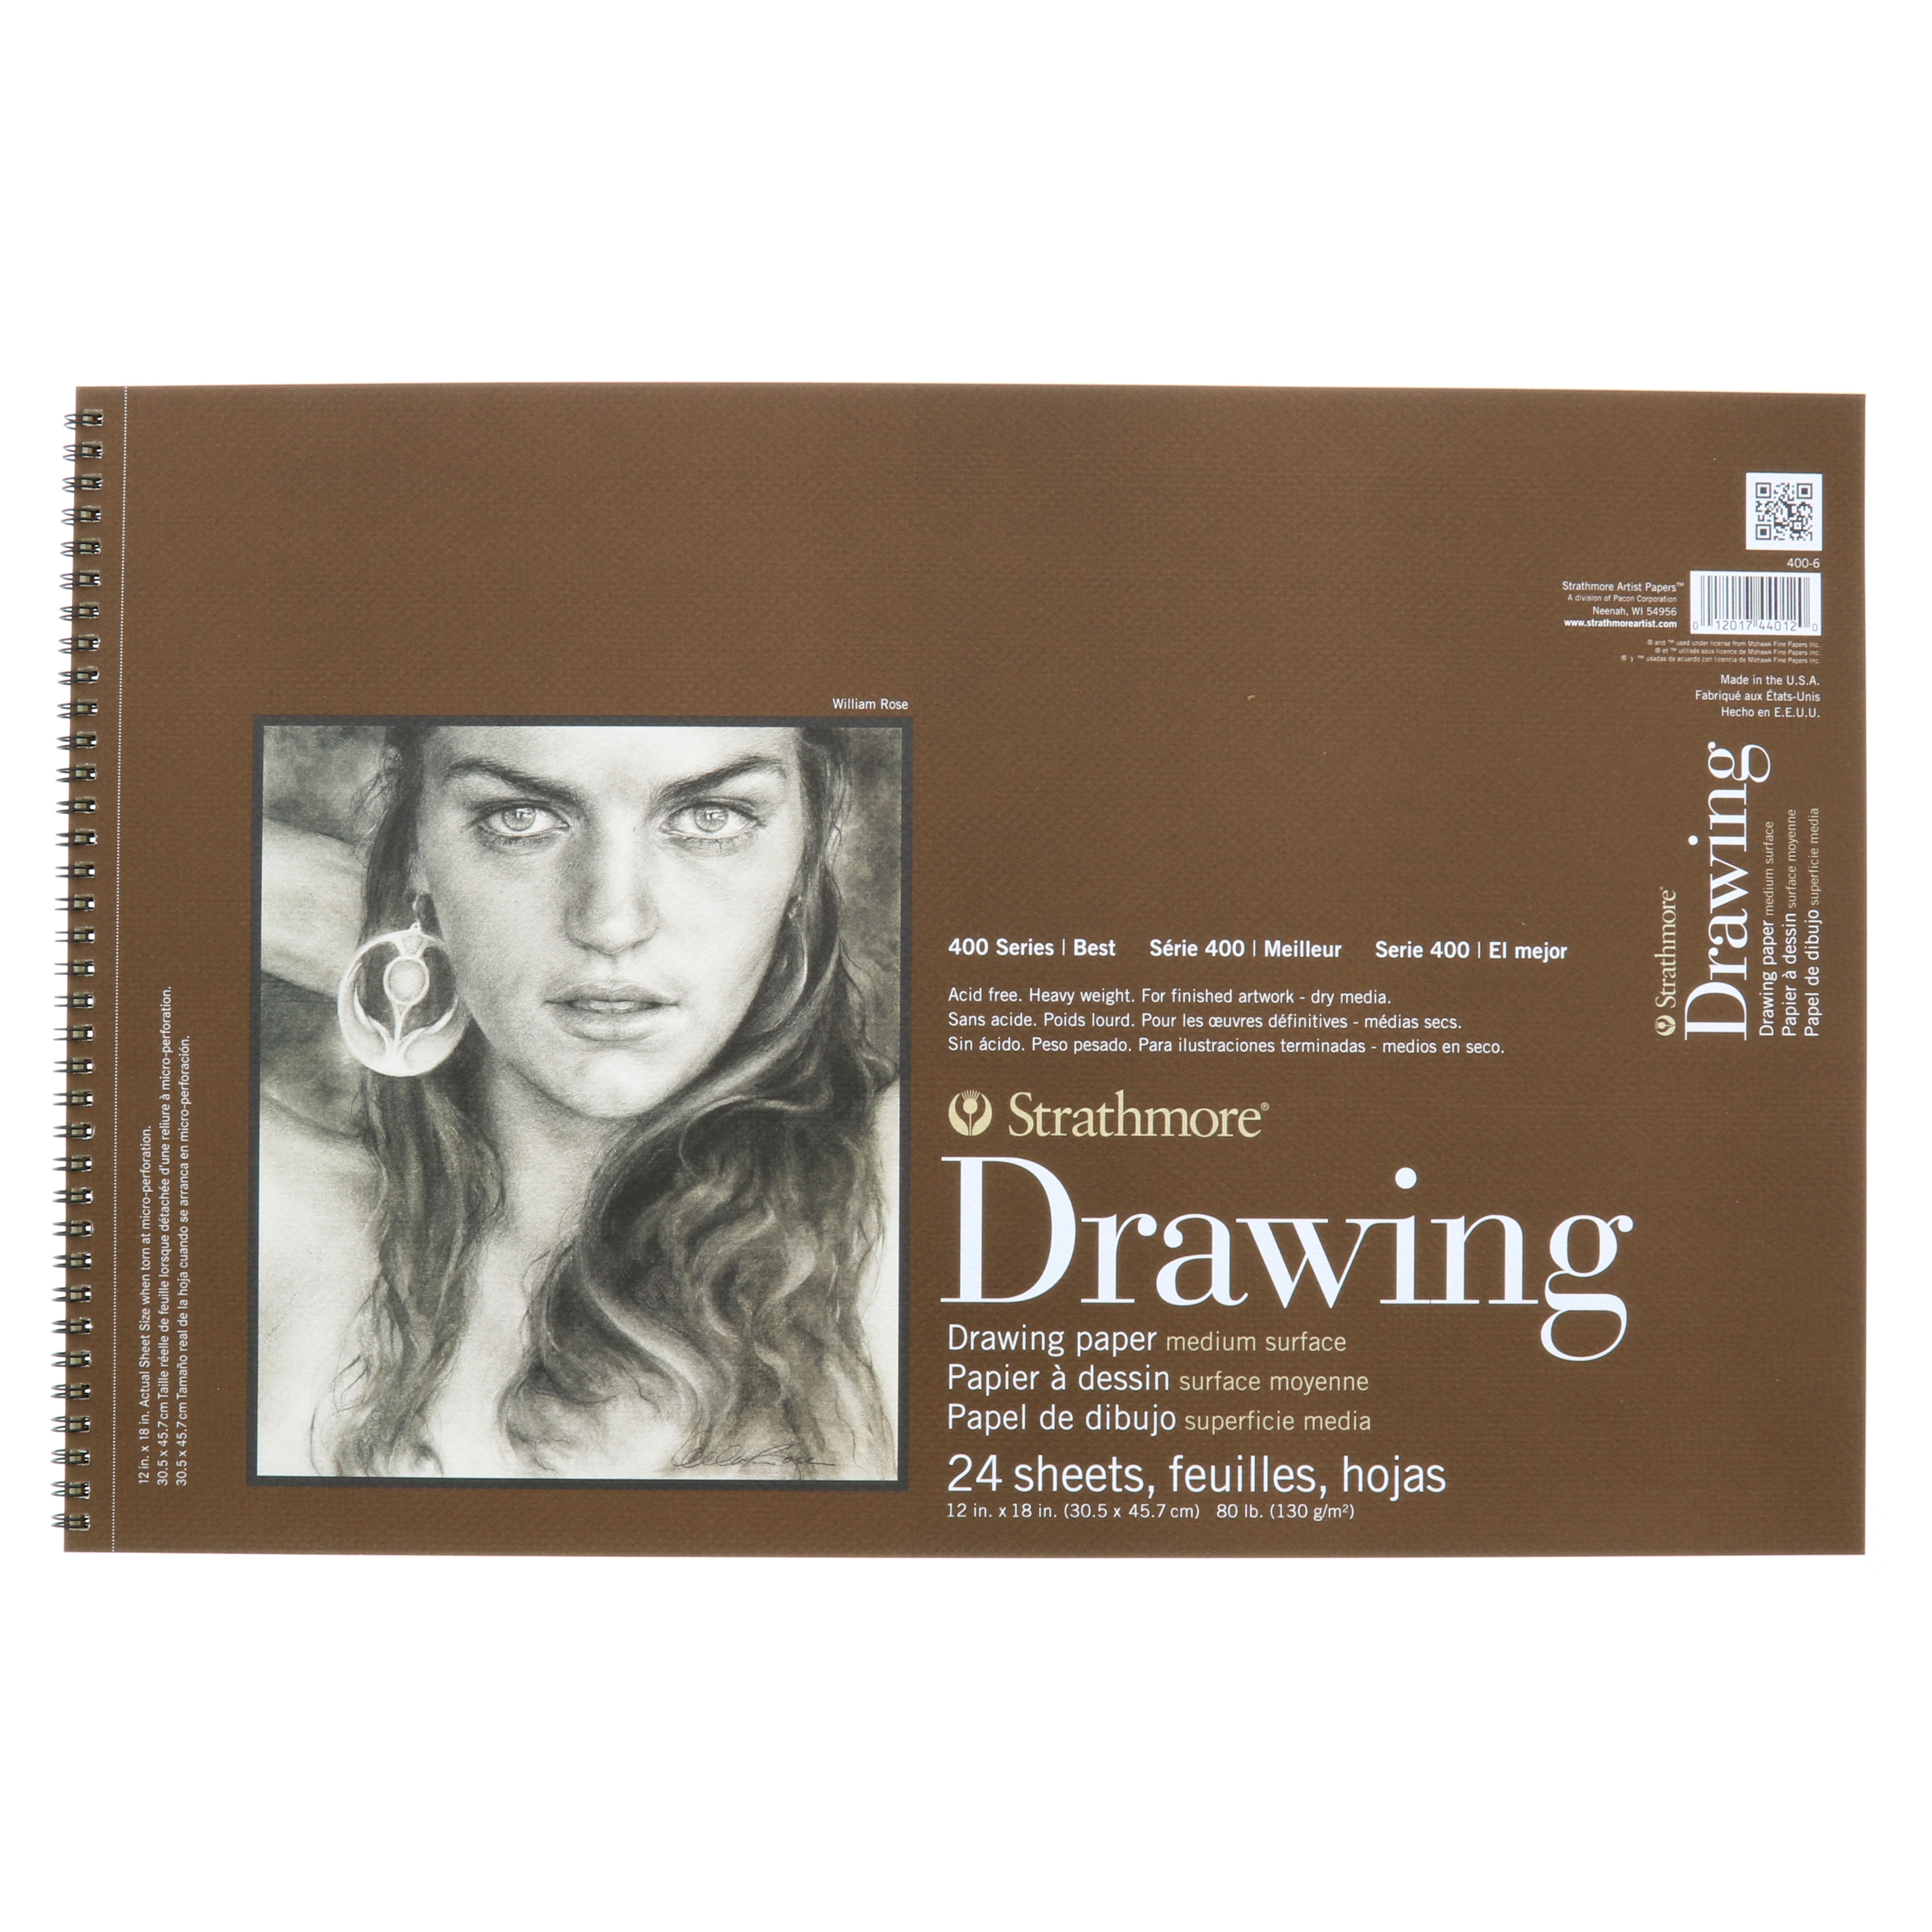 Strathmore Drawing Paper Pad, 400 Series, Medium Surface, 12" x 18"